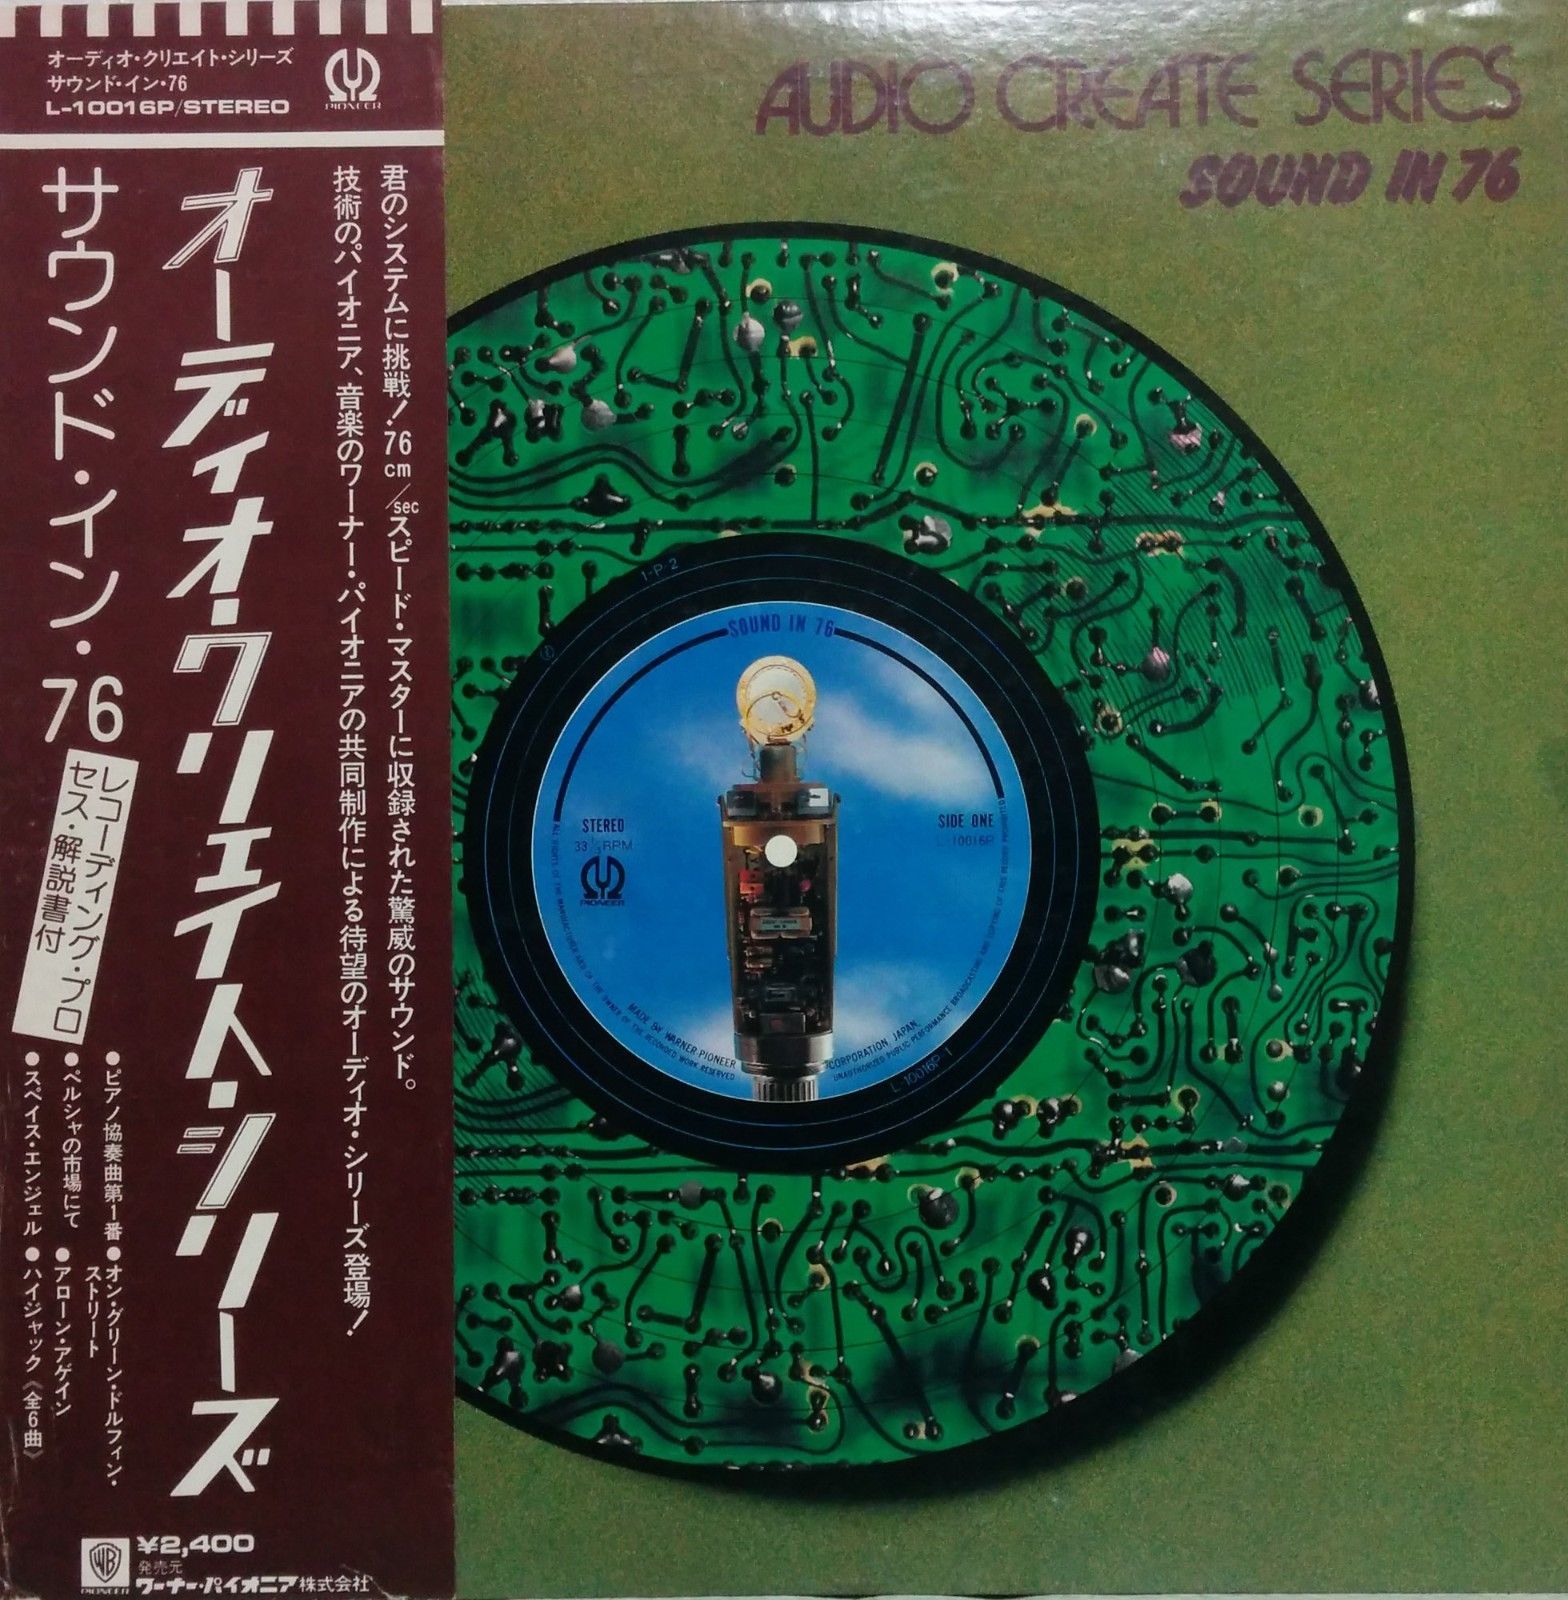 NORIO MAEDA 前田憲男 - Audio Create Series : Sound In 76 cover 